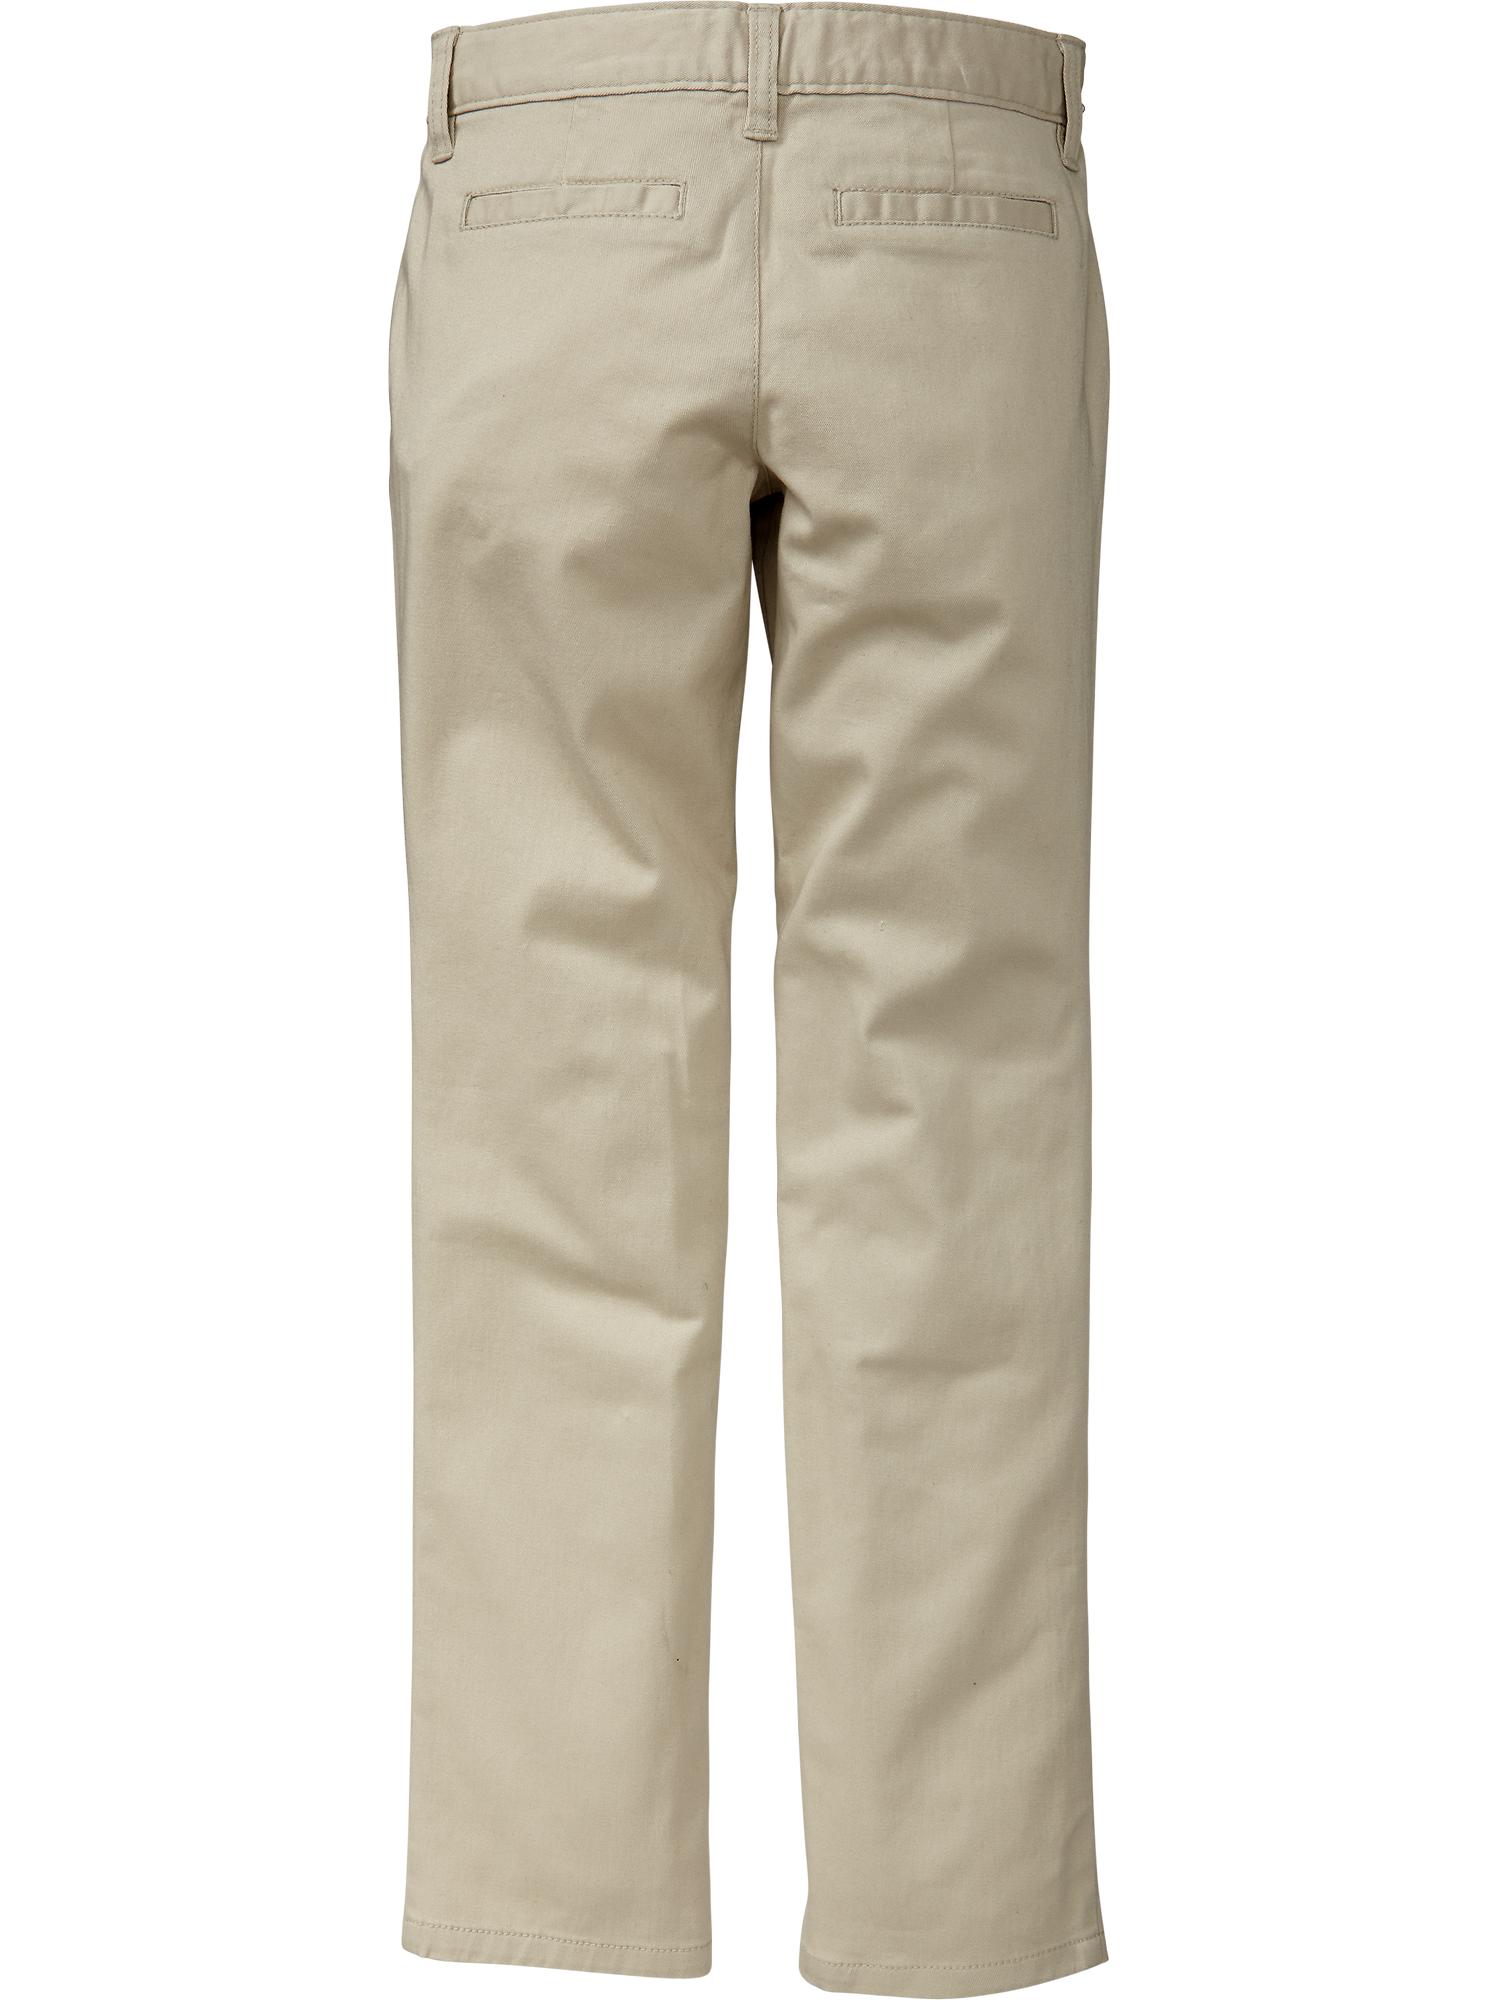 Old Navy Girls Uniform Light Brown Skinny Pants Size 14